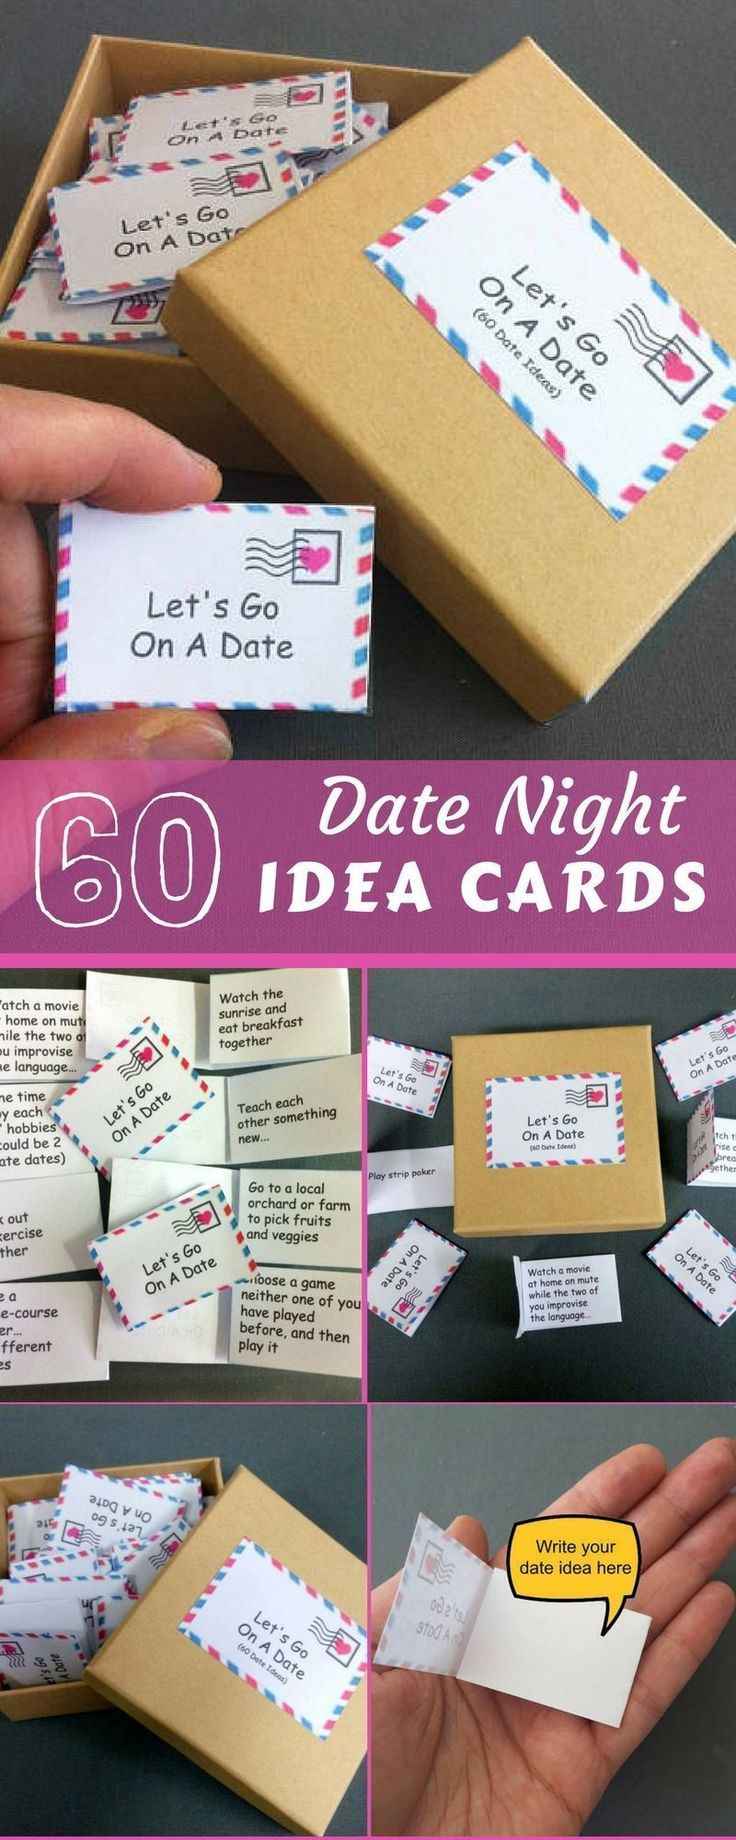 Boyfriend Gift Ideas
 Date Night Box 60 Date Night Ideas Romantic Gift For